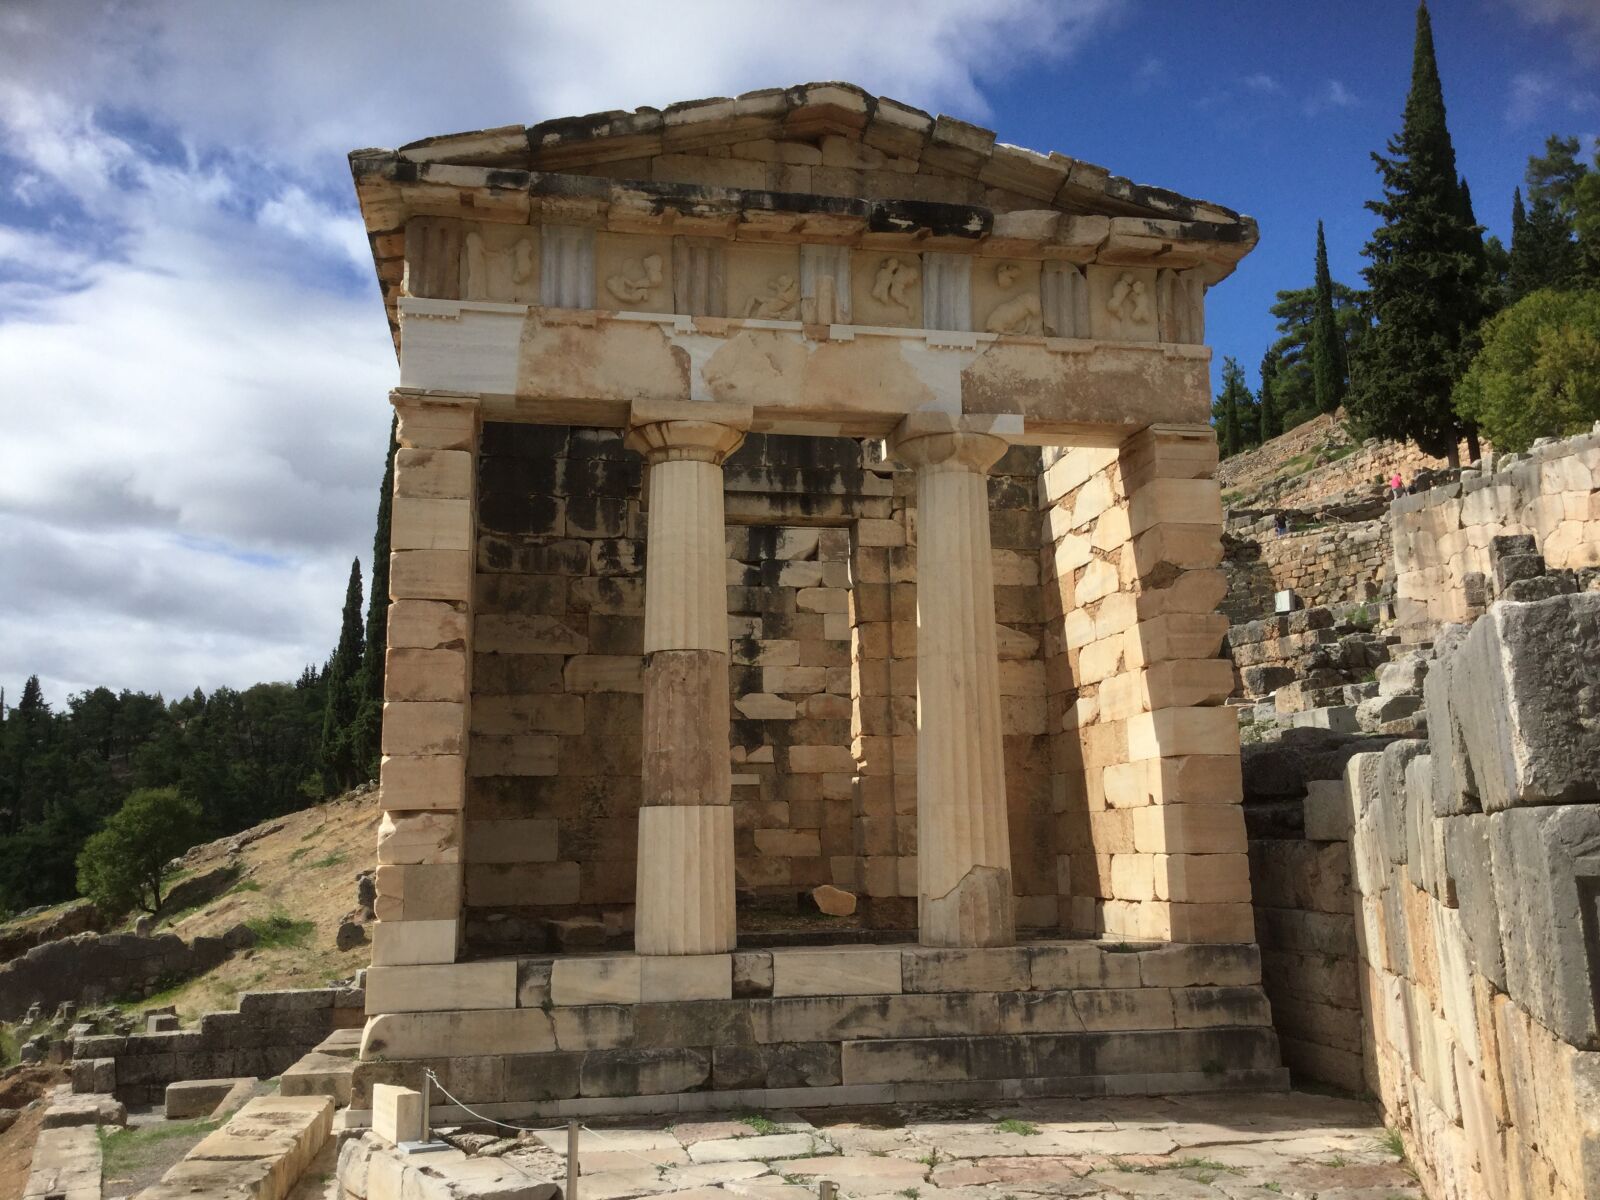 iPad Air 2 back camera 3.3mm f/2.4 sample photo. Greece, travel, ruins photography